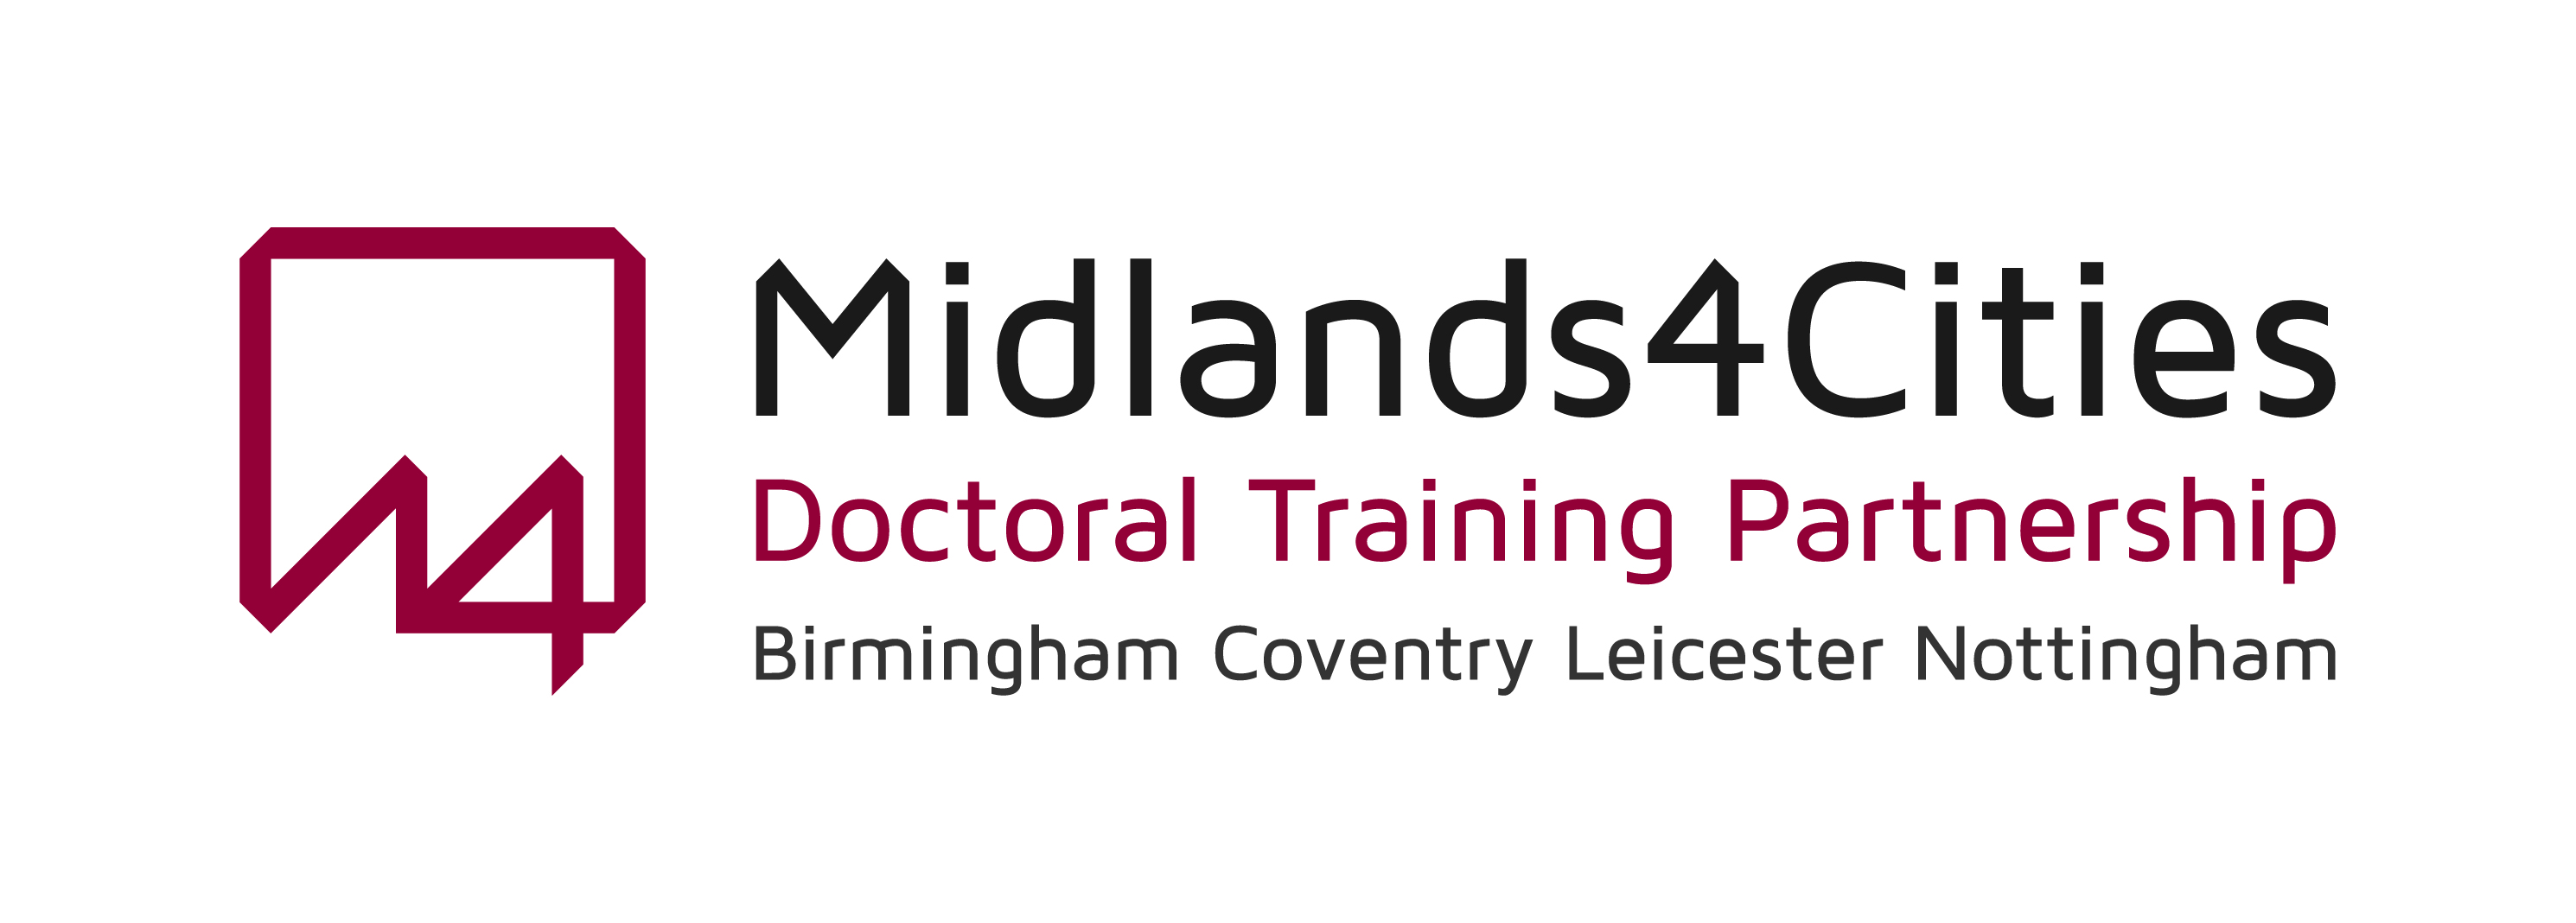 Midlands4Cities Doctoral Training Partnership logo